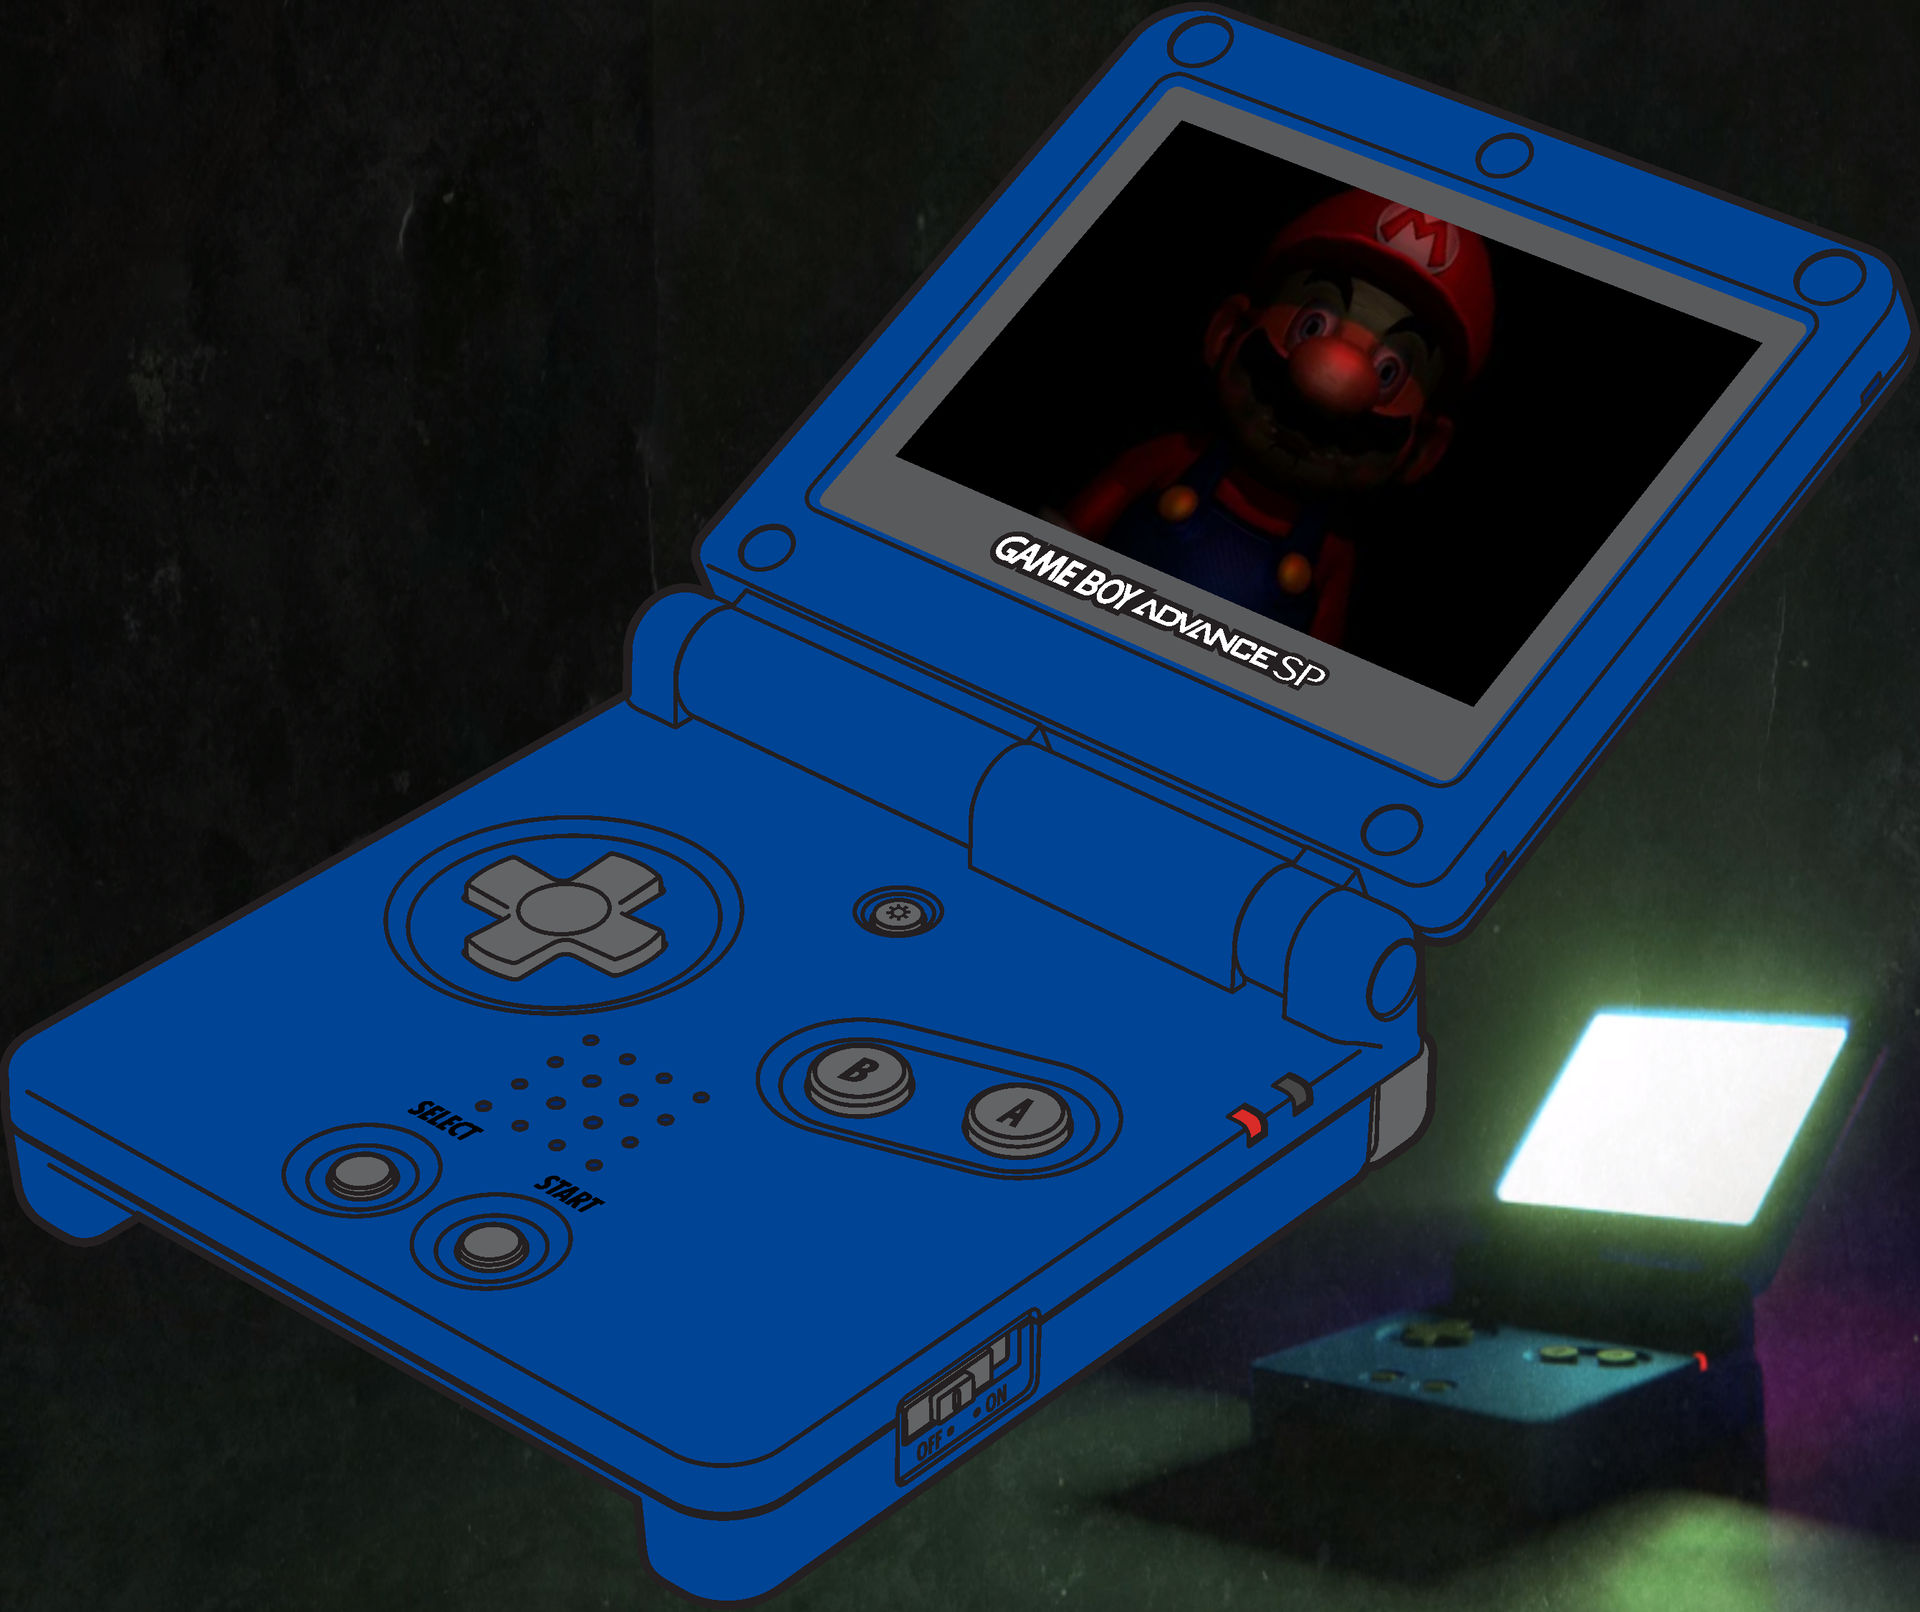 Creepypasta Game Boy Advance SP (Halloween Time) by nickanater1 on  DeviantArt